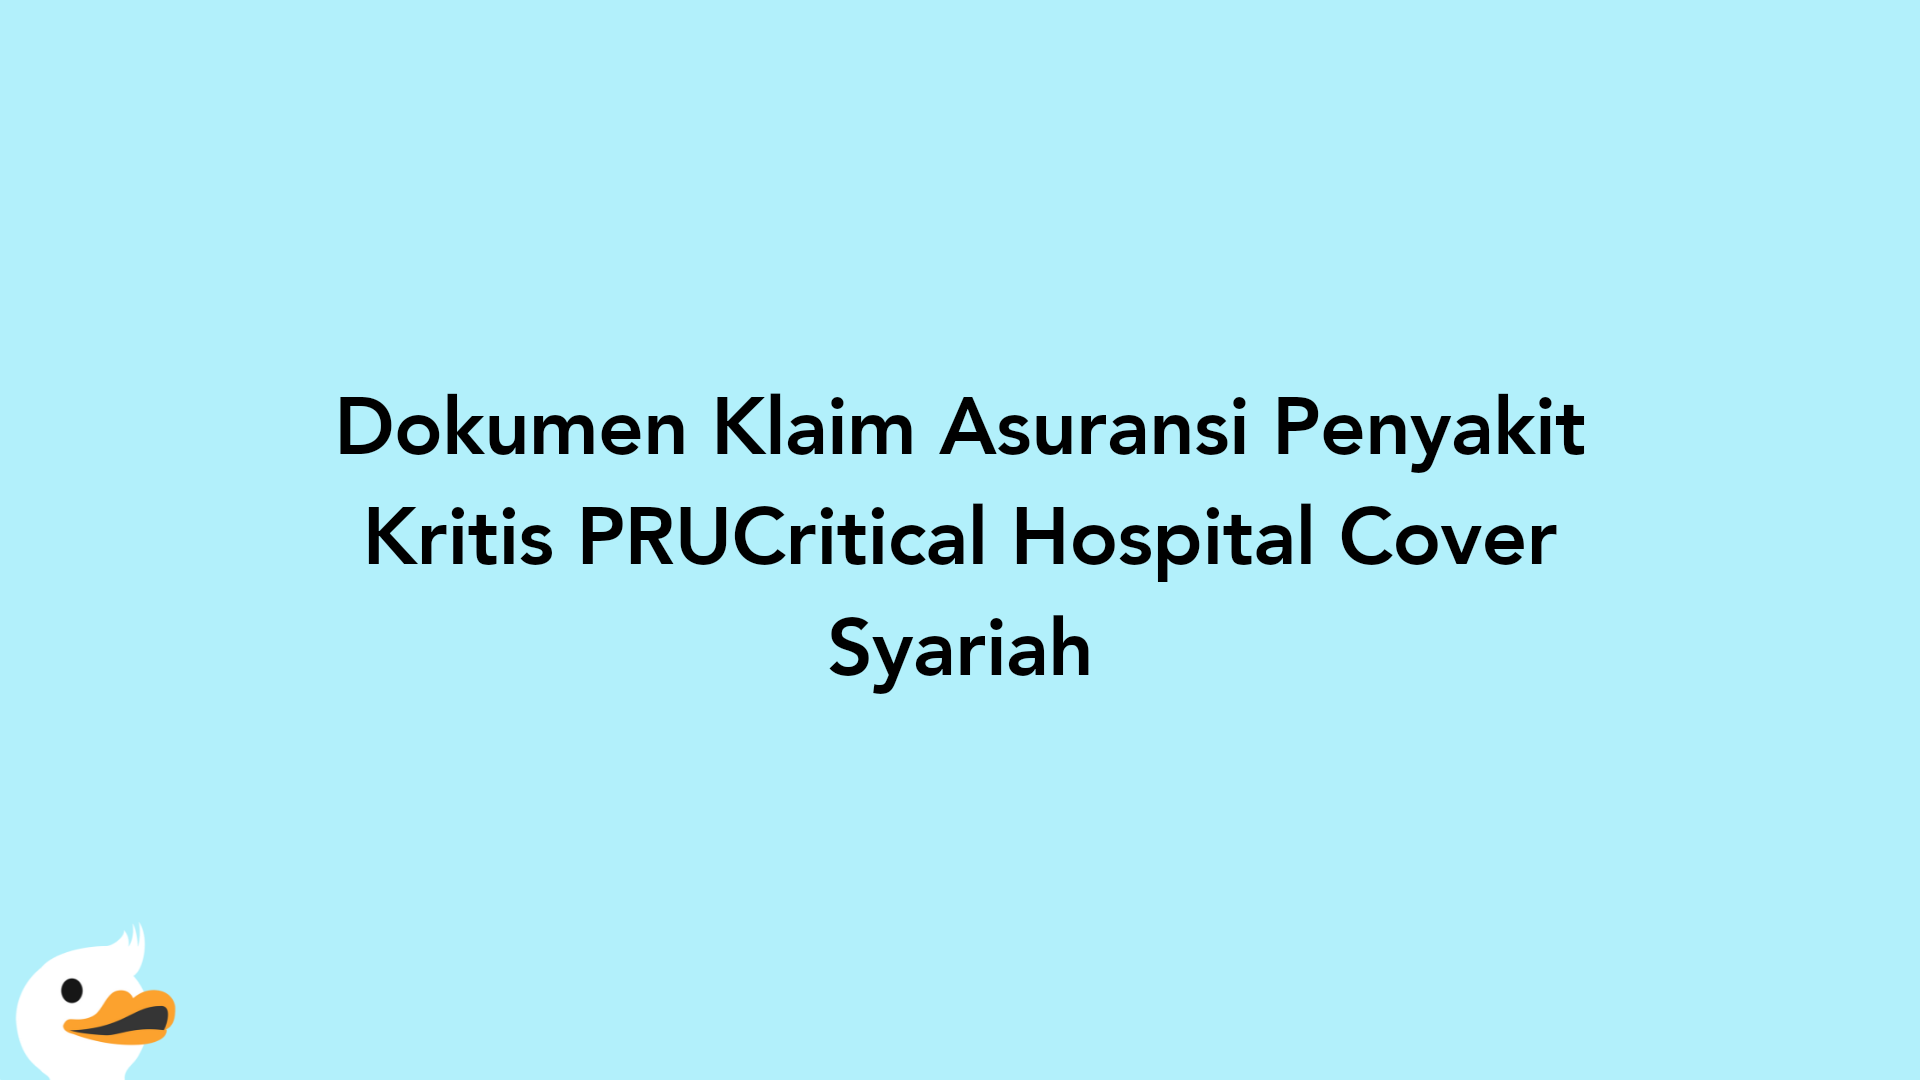 Dokumen Klaim Asuransi Penyakit Kritis PRUCritical Hospital Cover Syariah